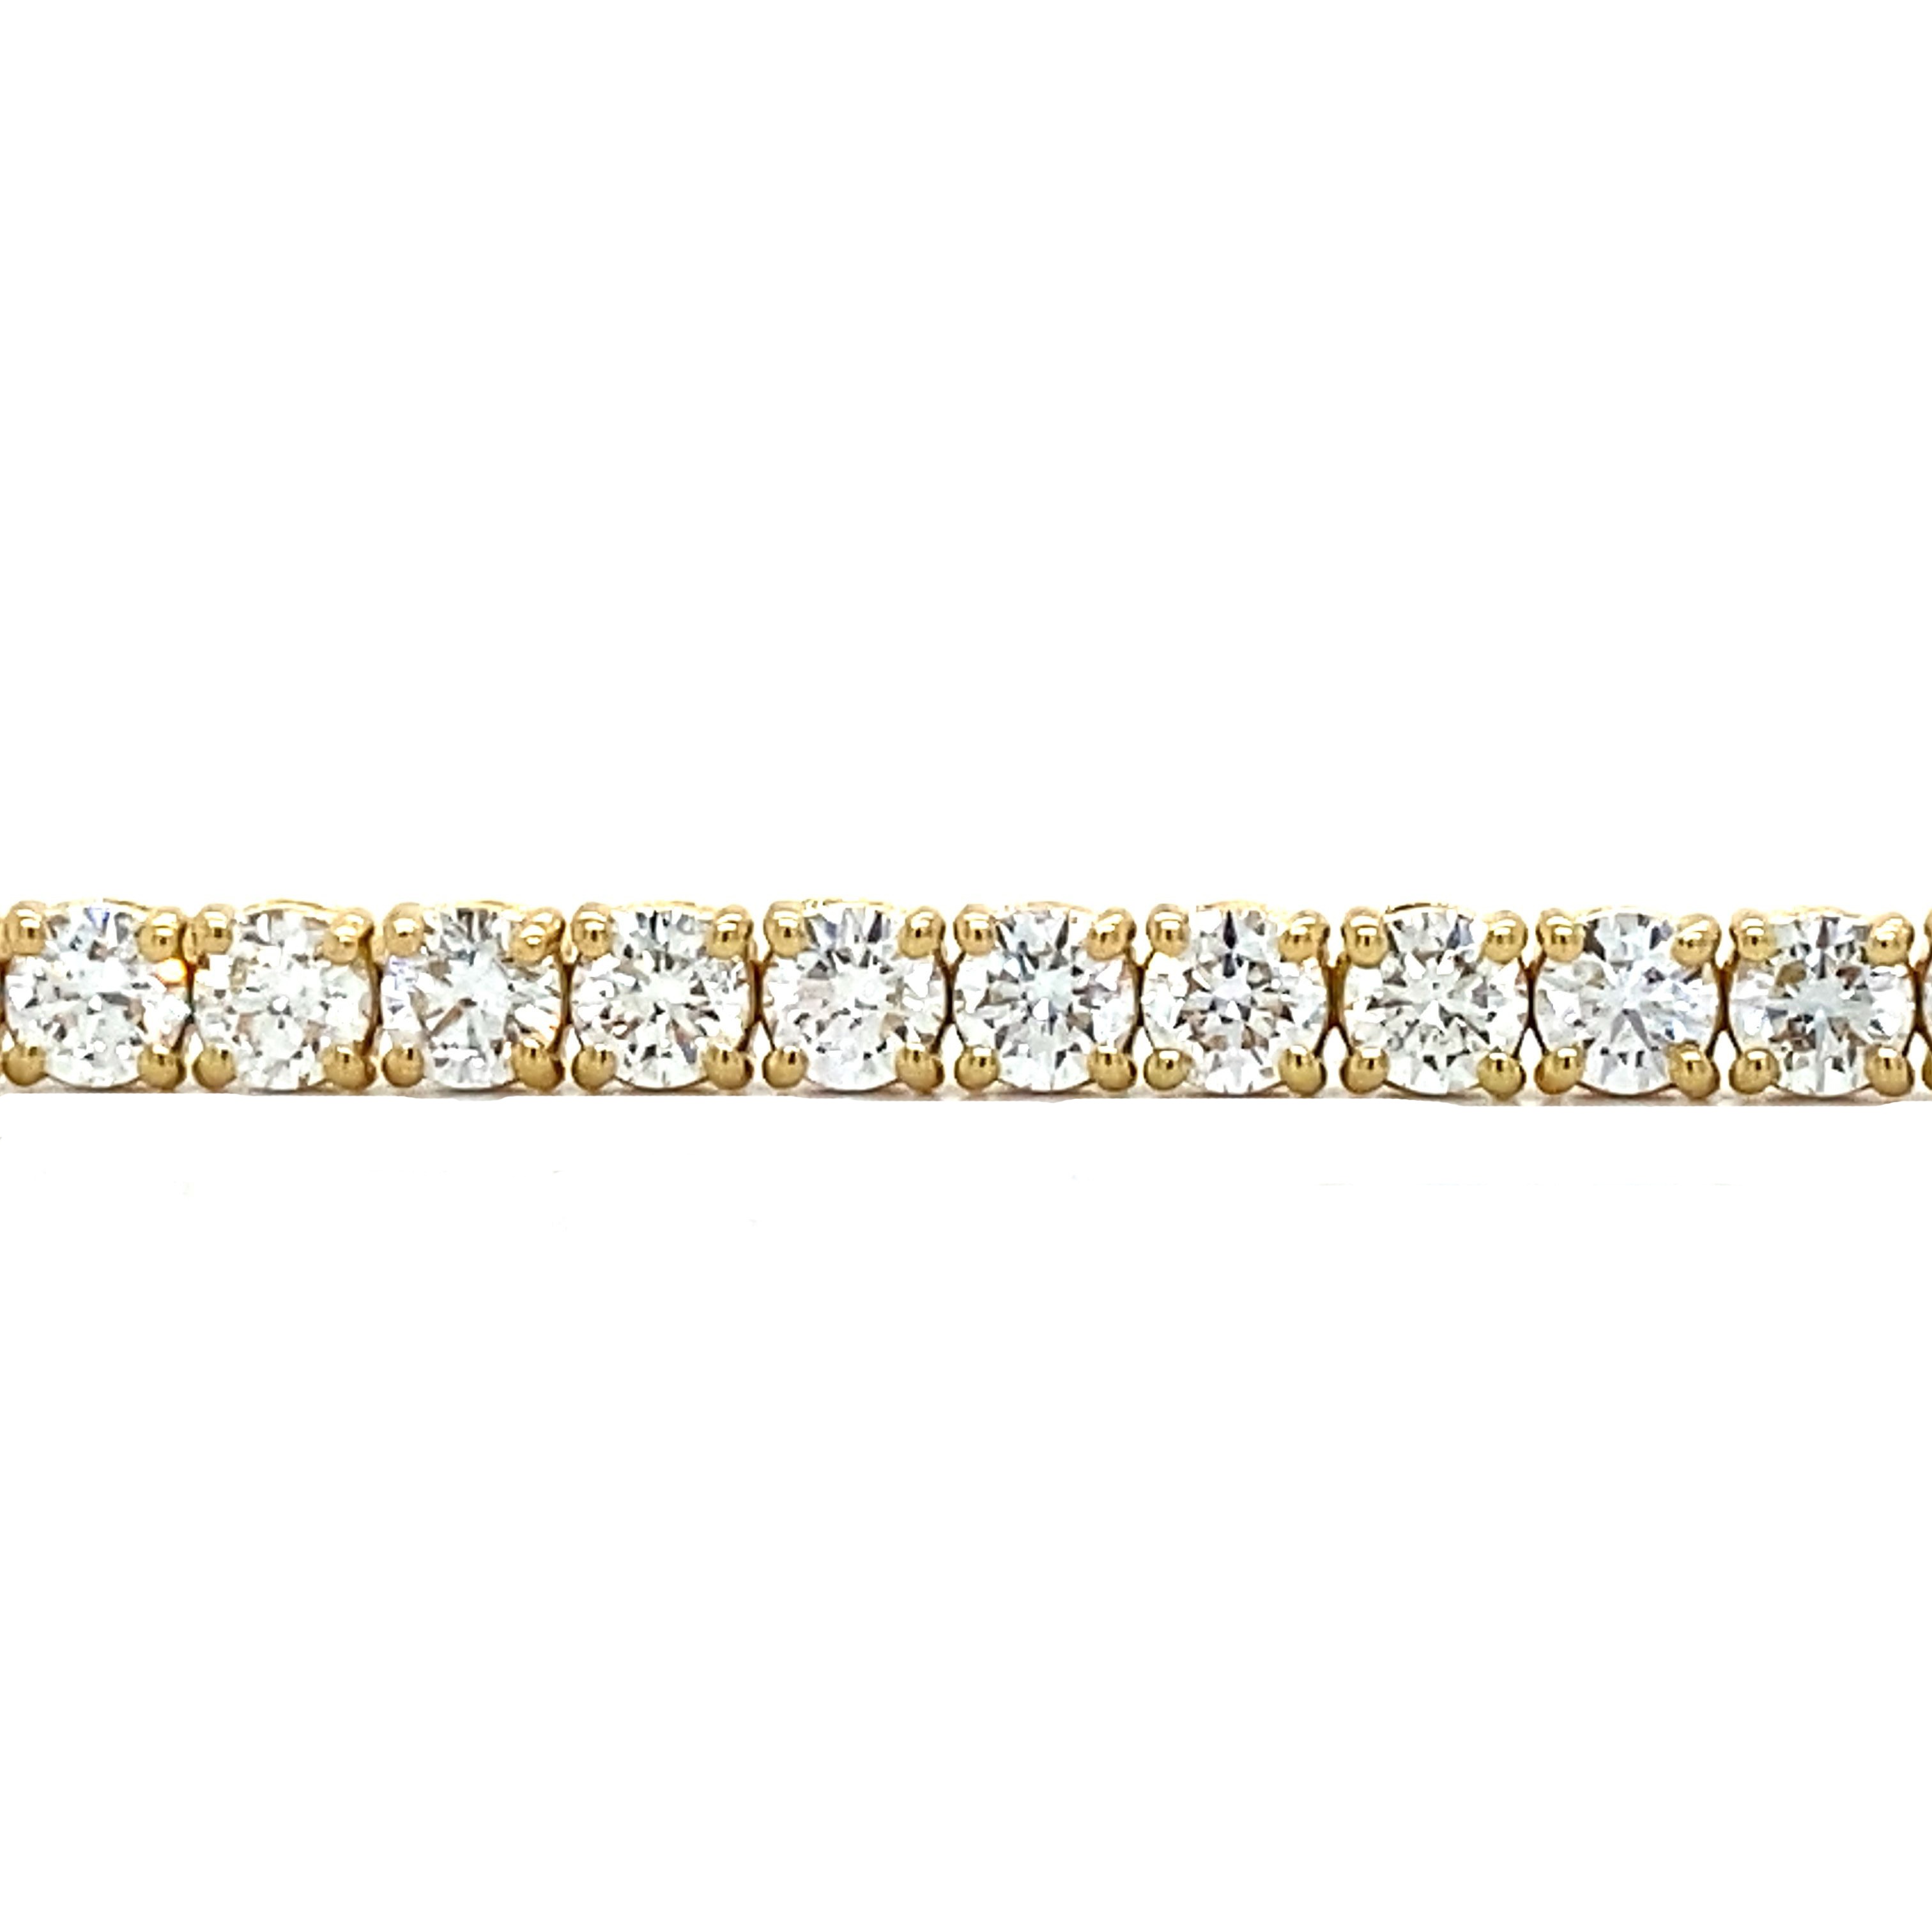 5.88 Carat Diamond Tennis Bracelet